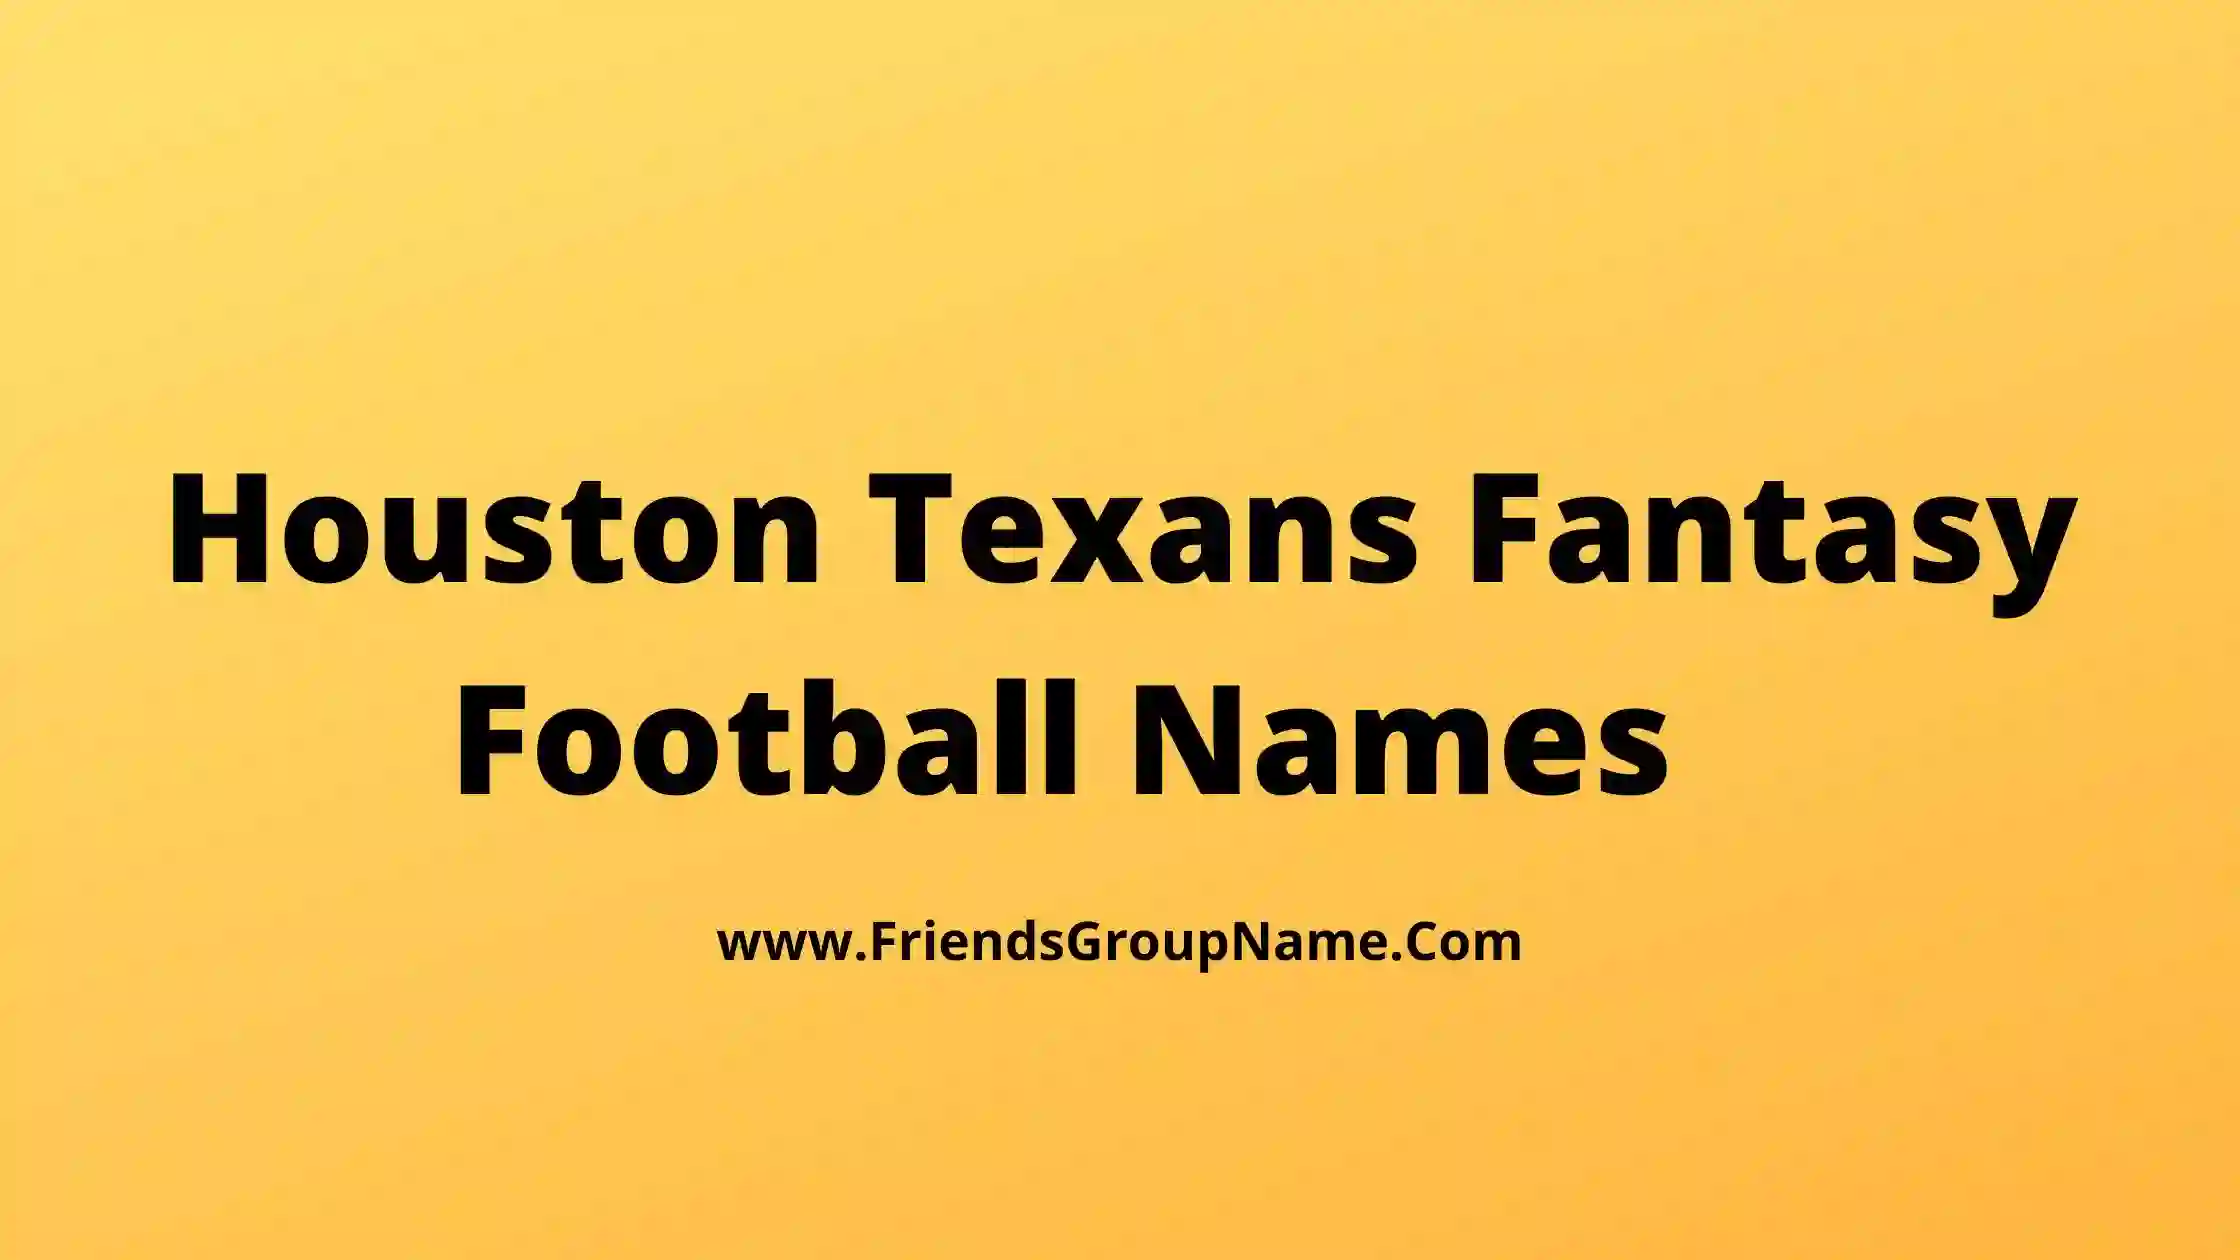 Houston Texans Fantasy Football Names